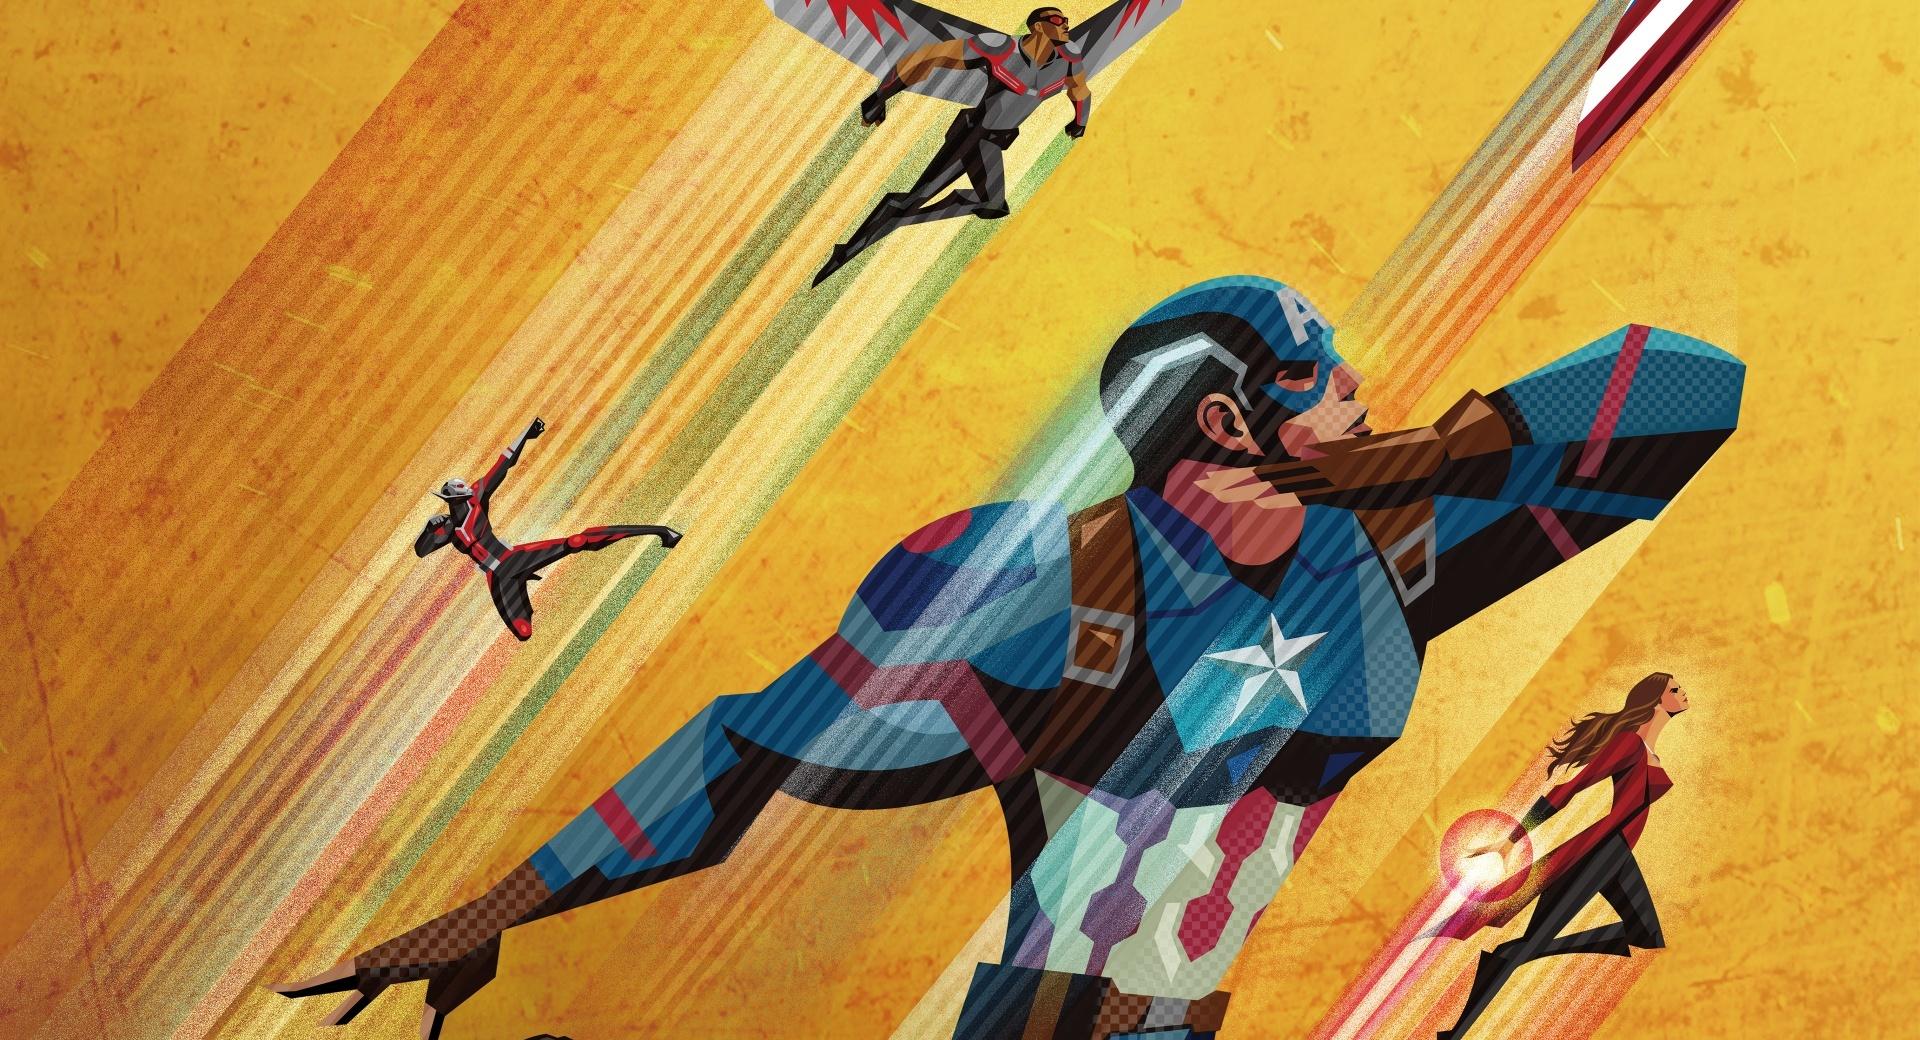 Civil War Artwork Captain America at 1024 x 1024 iPad size wallpapers HD quality